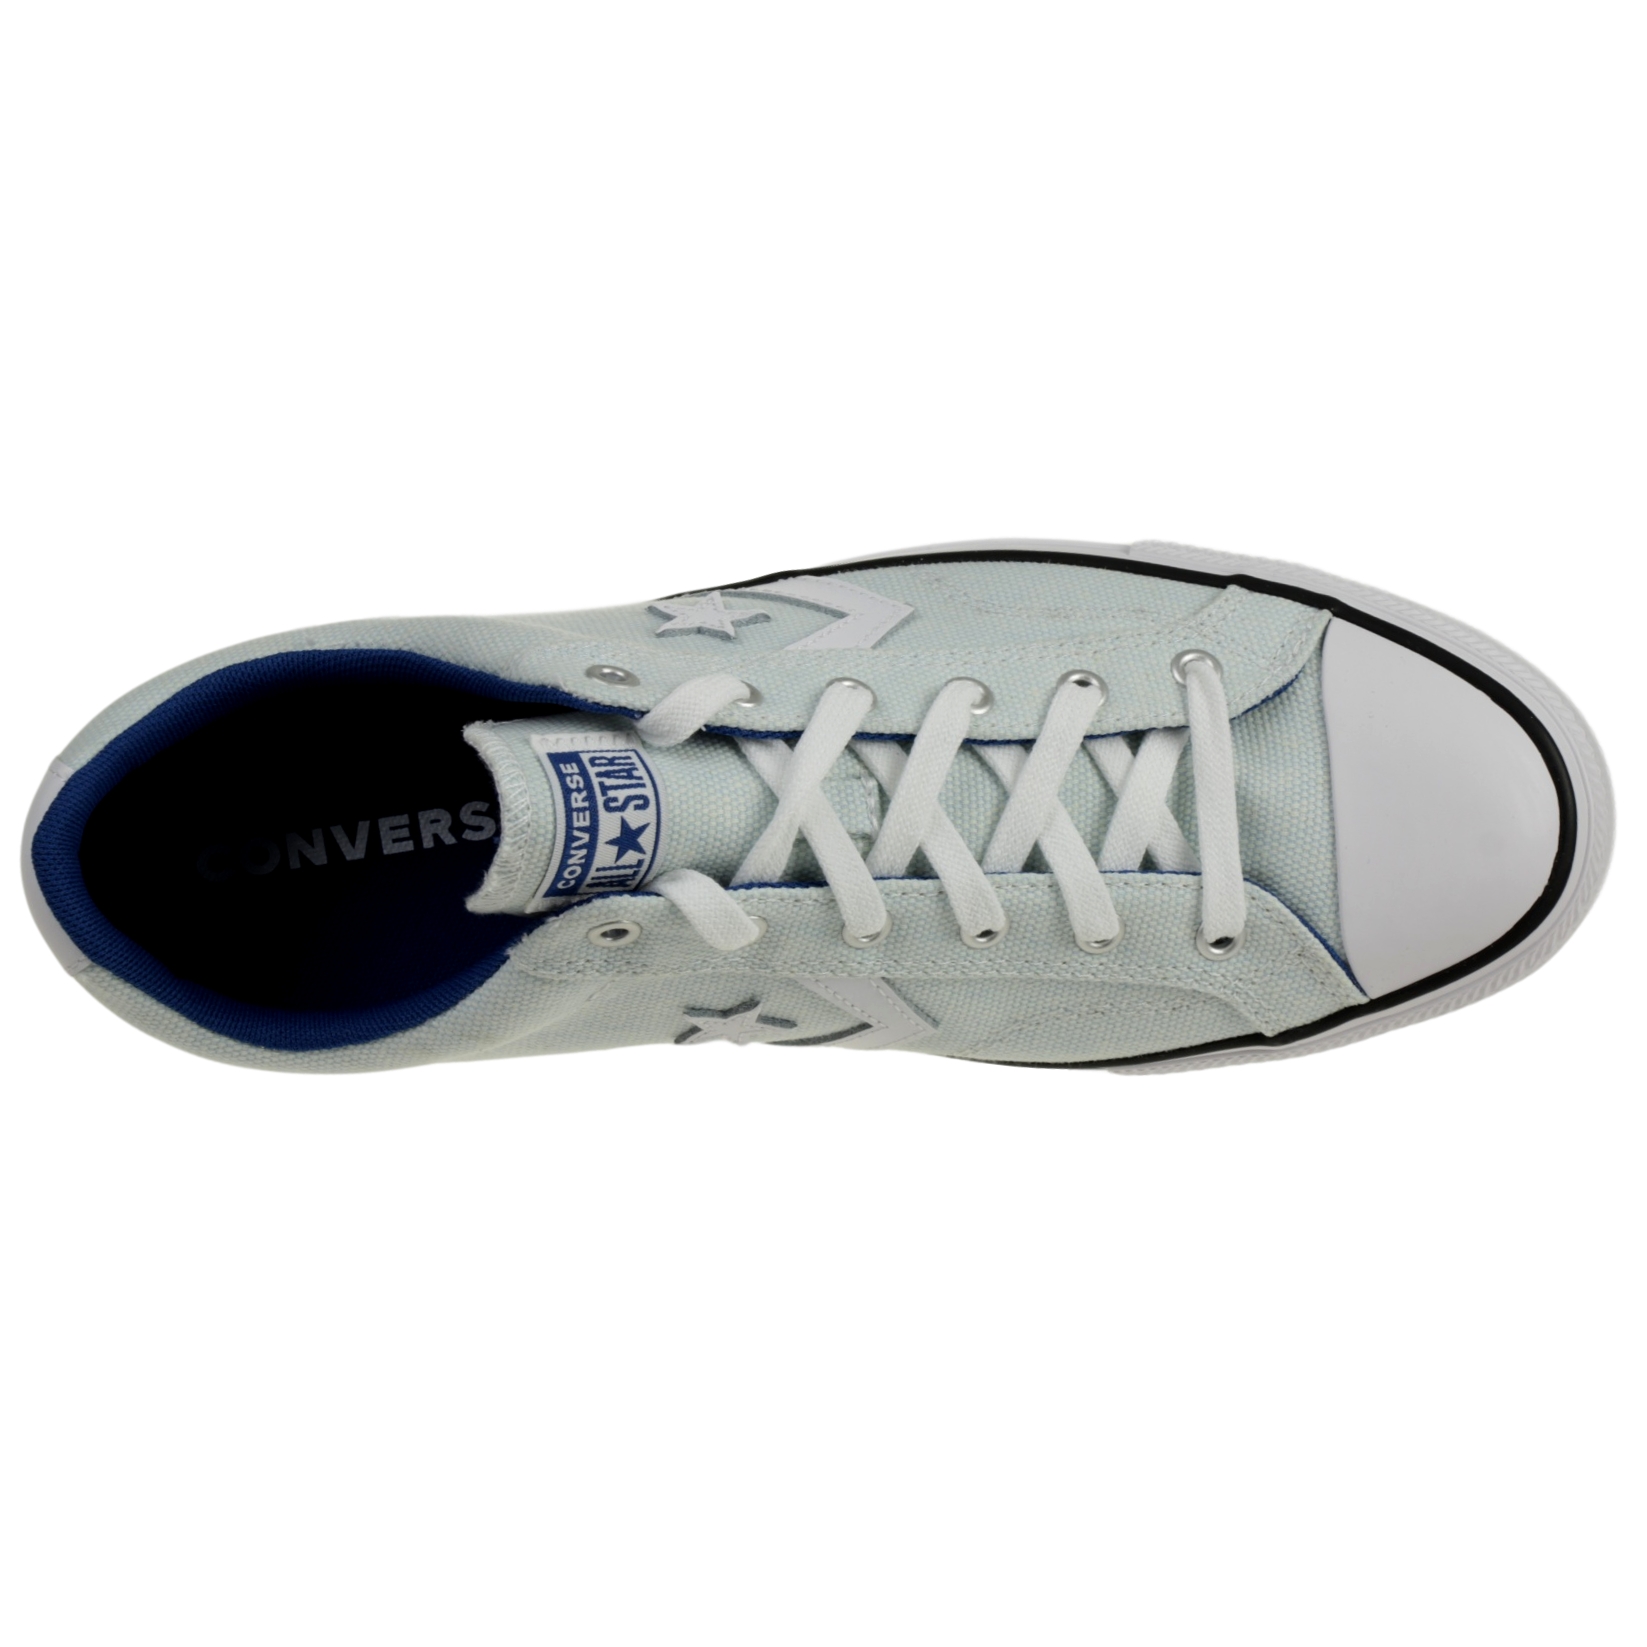 Converse STAR PLAYER OX Schuhe Sneaker Canvas Unisex Hellblau 167672C Gr. 36